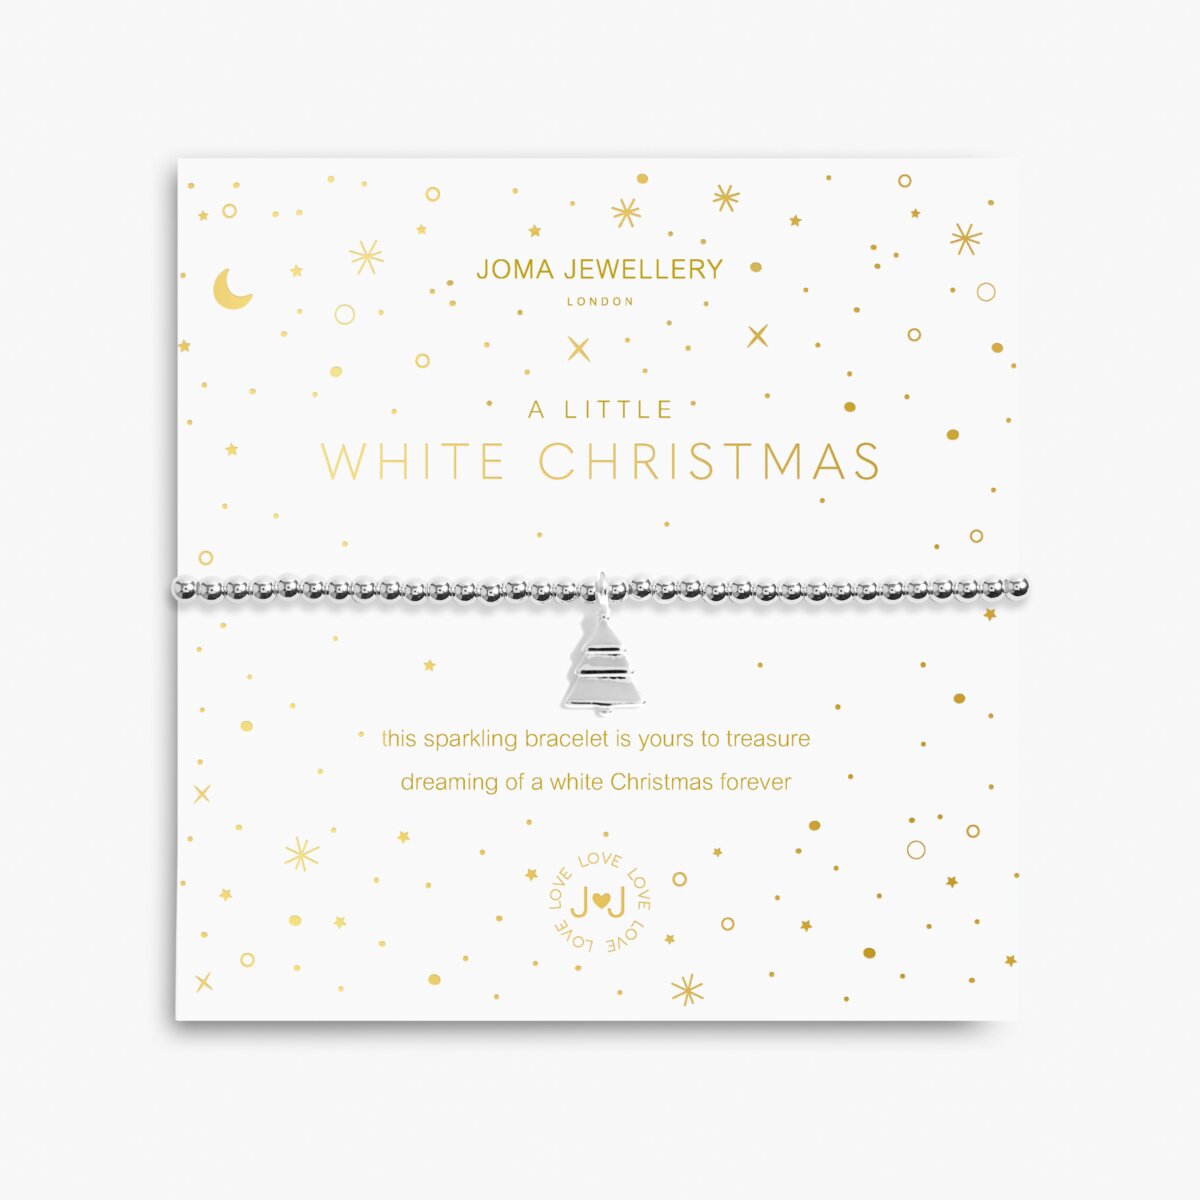 JOMA JEWELLERY | CHRISTMAS A LITTLES | WHITE CHRISTMAS BRACELET